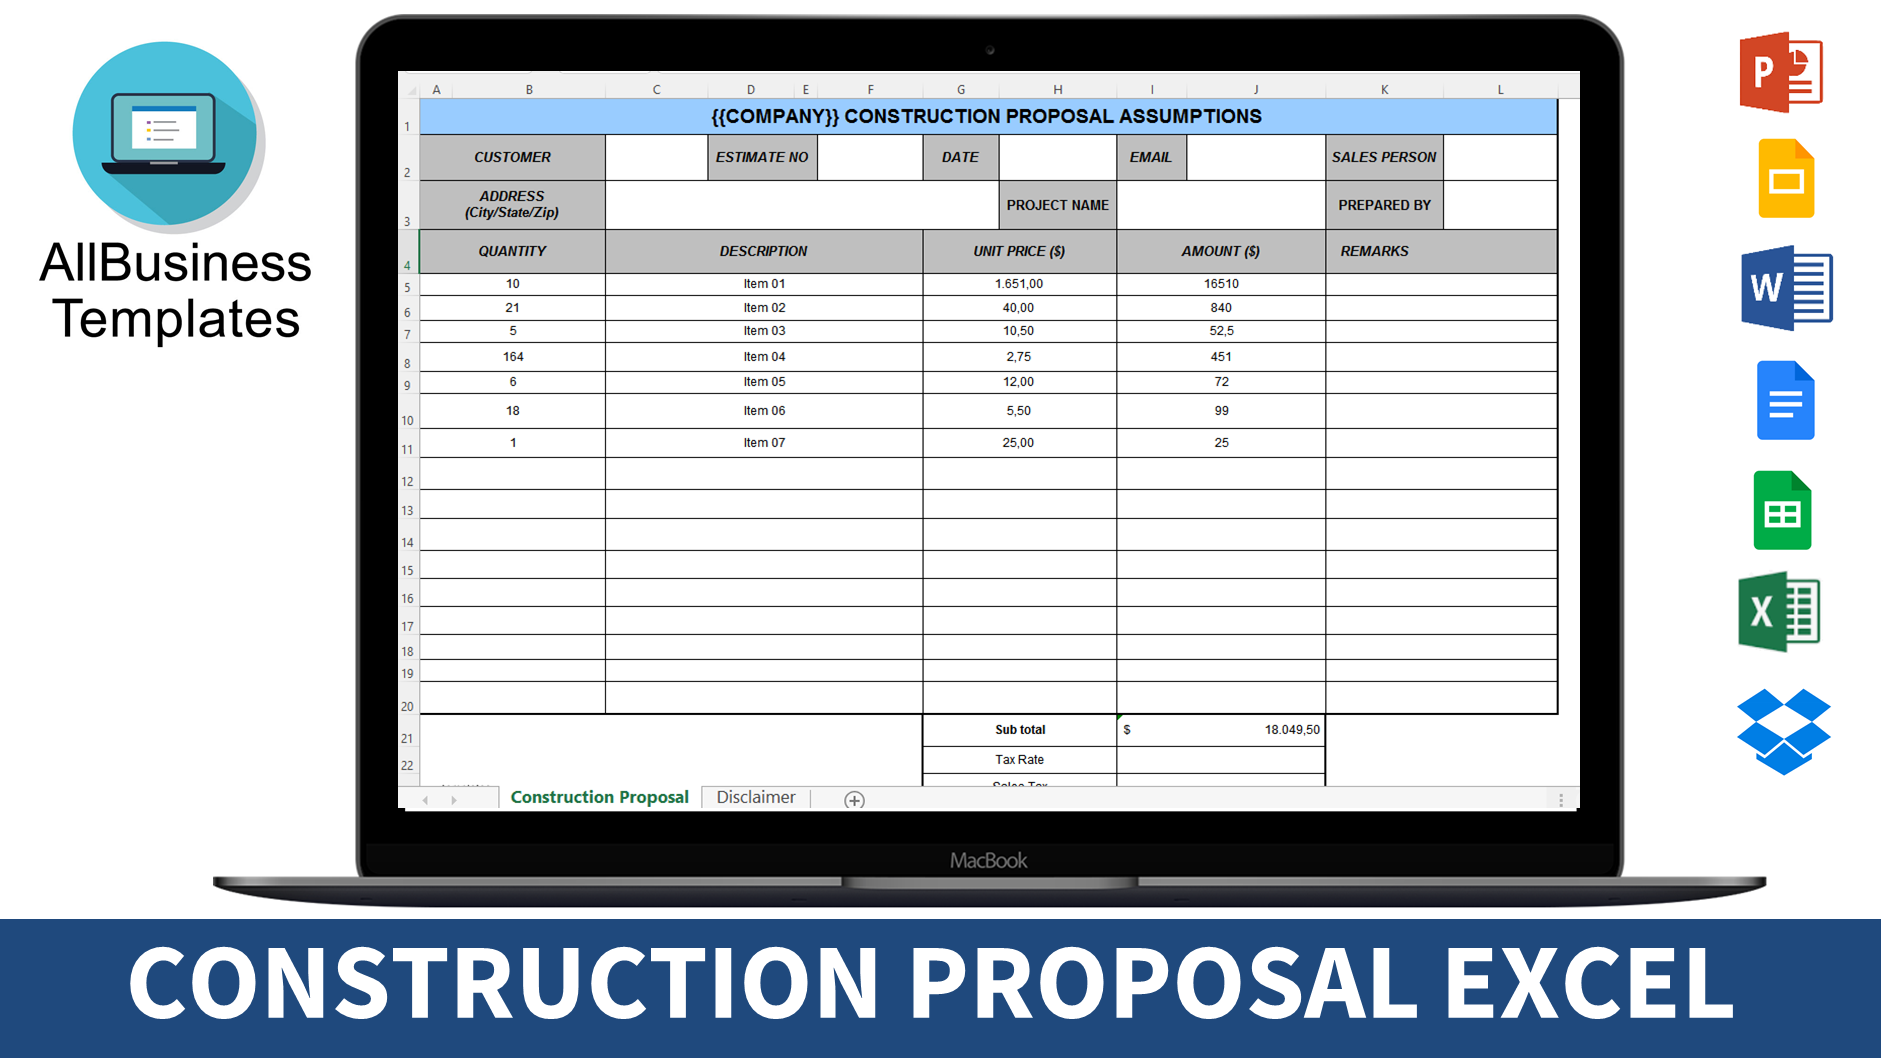 Construction Proposal Assumptions Excel main image